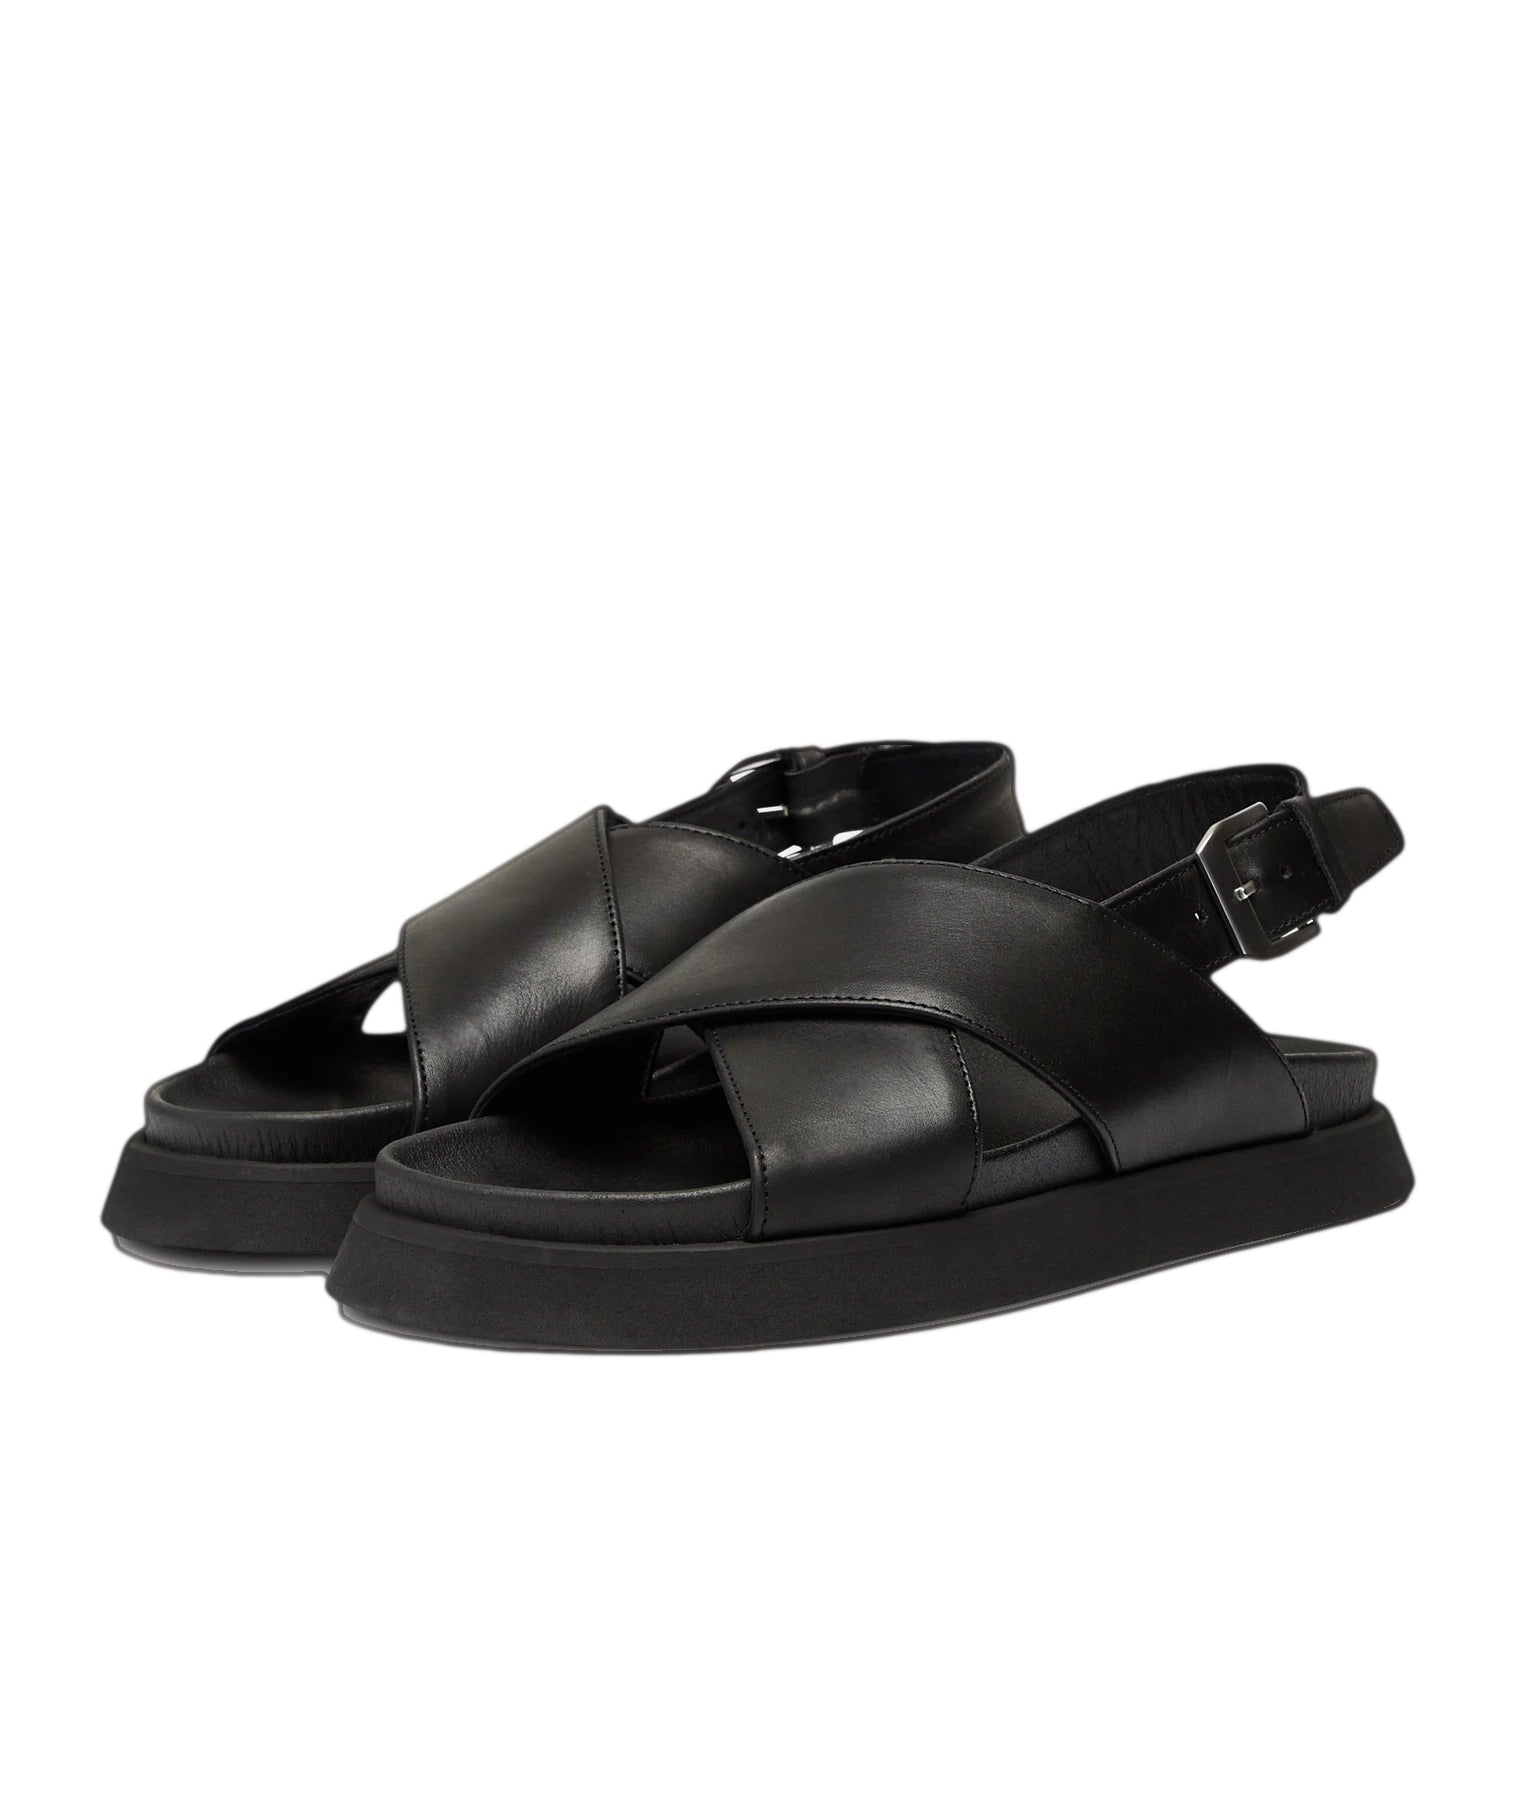 Yodi Sandals, black leather